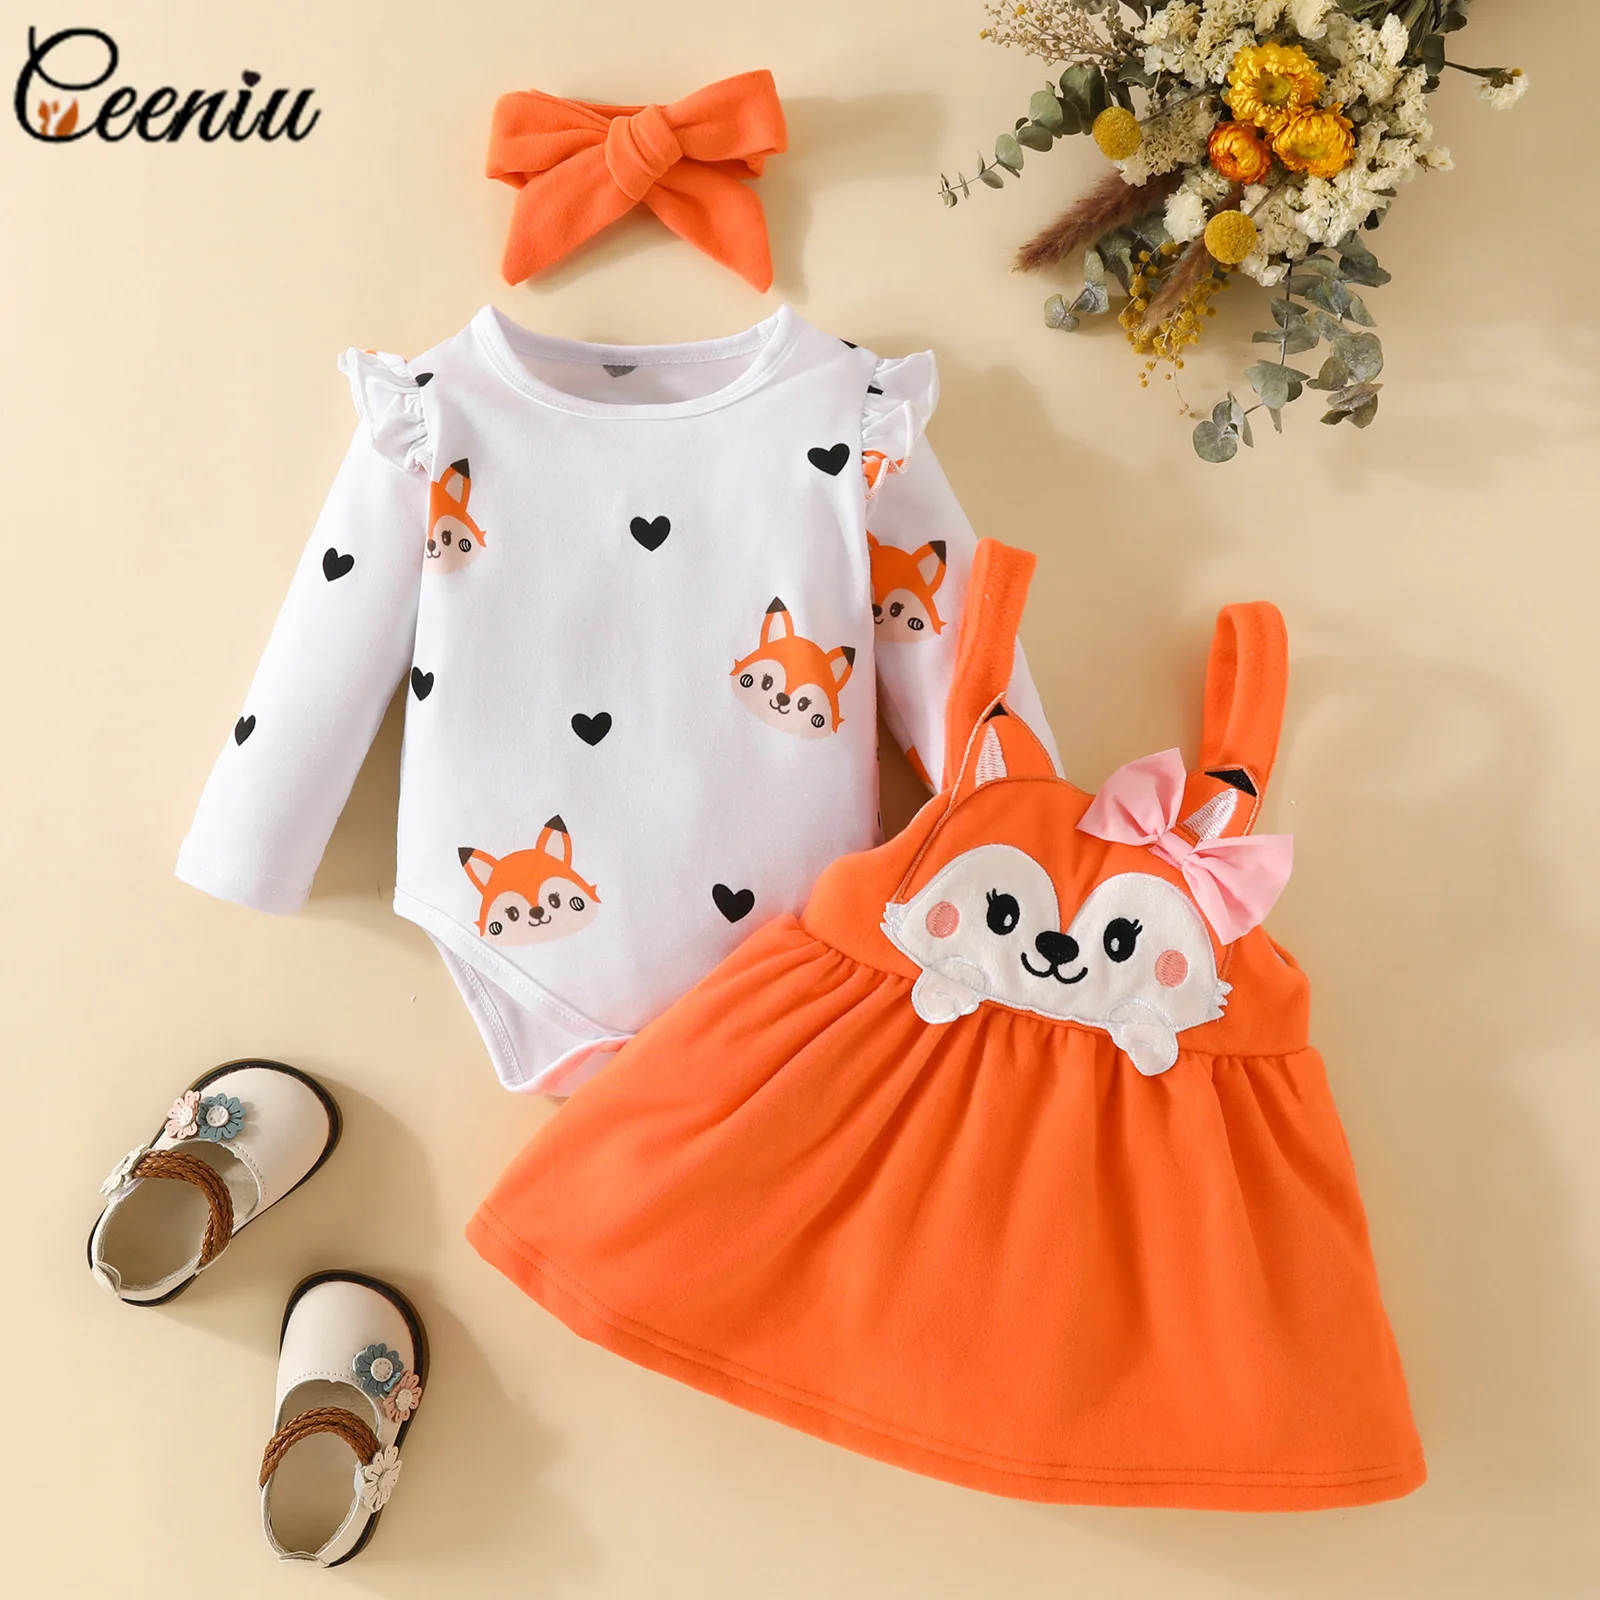 

Ceeniu 0-18M Fox Baby Girls Winter Clothes Outfit Sets Heart Bodysuit and Suspender Cartoon Fox Dress Infant Newborn Clothes